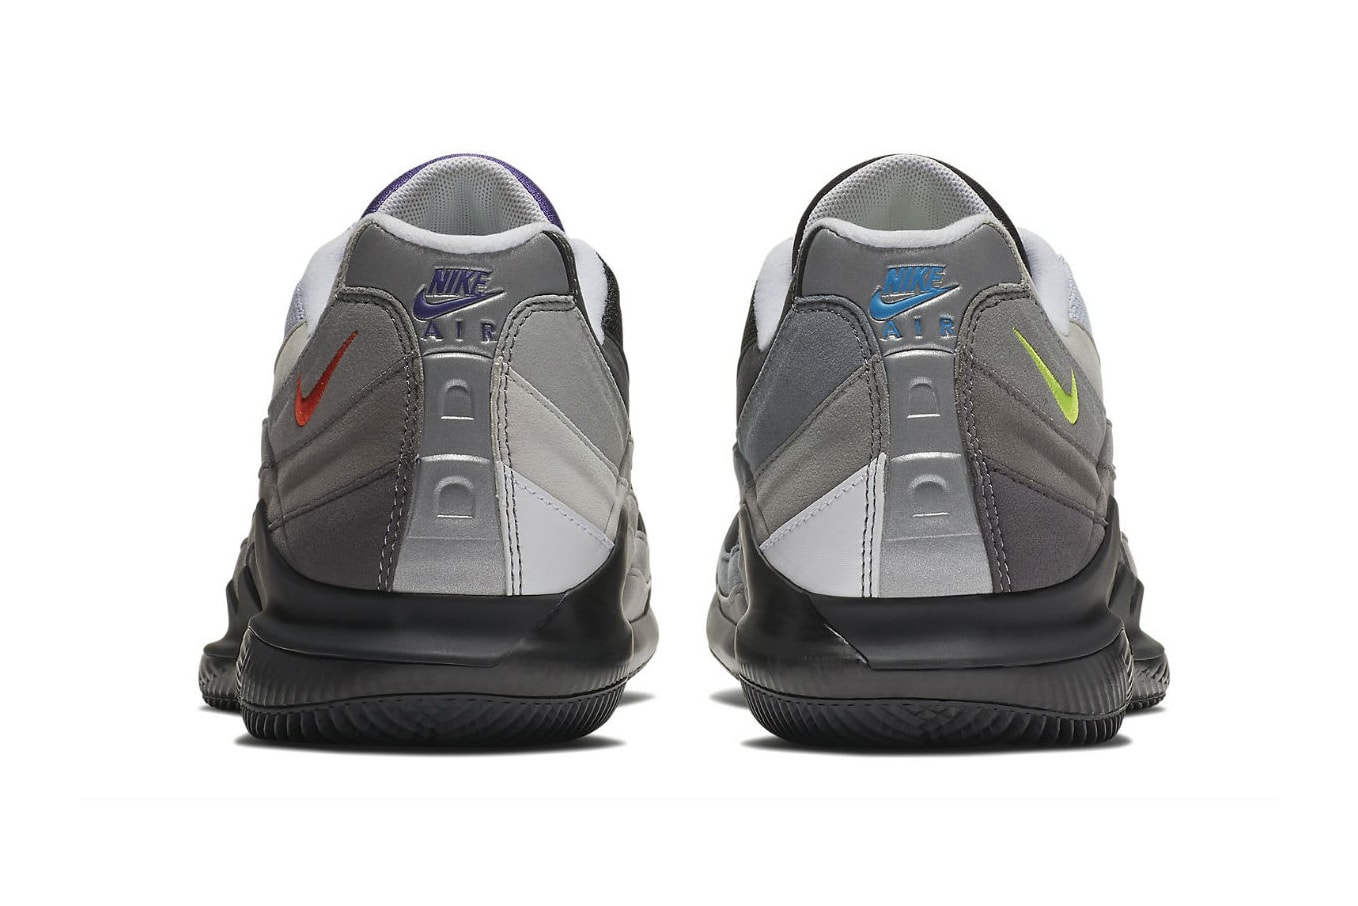 NikeCourt Vapor RF Air Max 95 Greedy hyrbrid nike roger federer 2018 march 20 release date info drop sneakers shoes footwear volt safety orange AO8759 077​